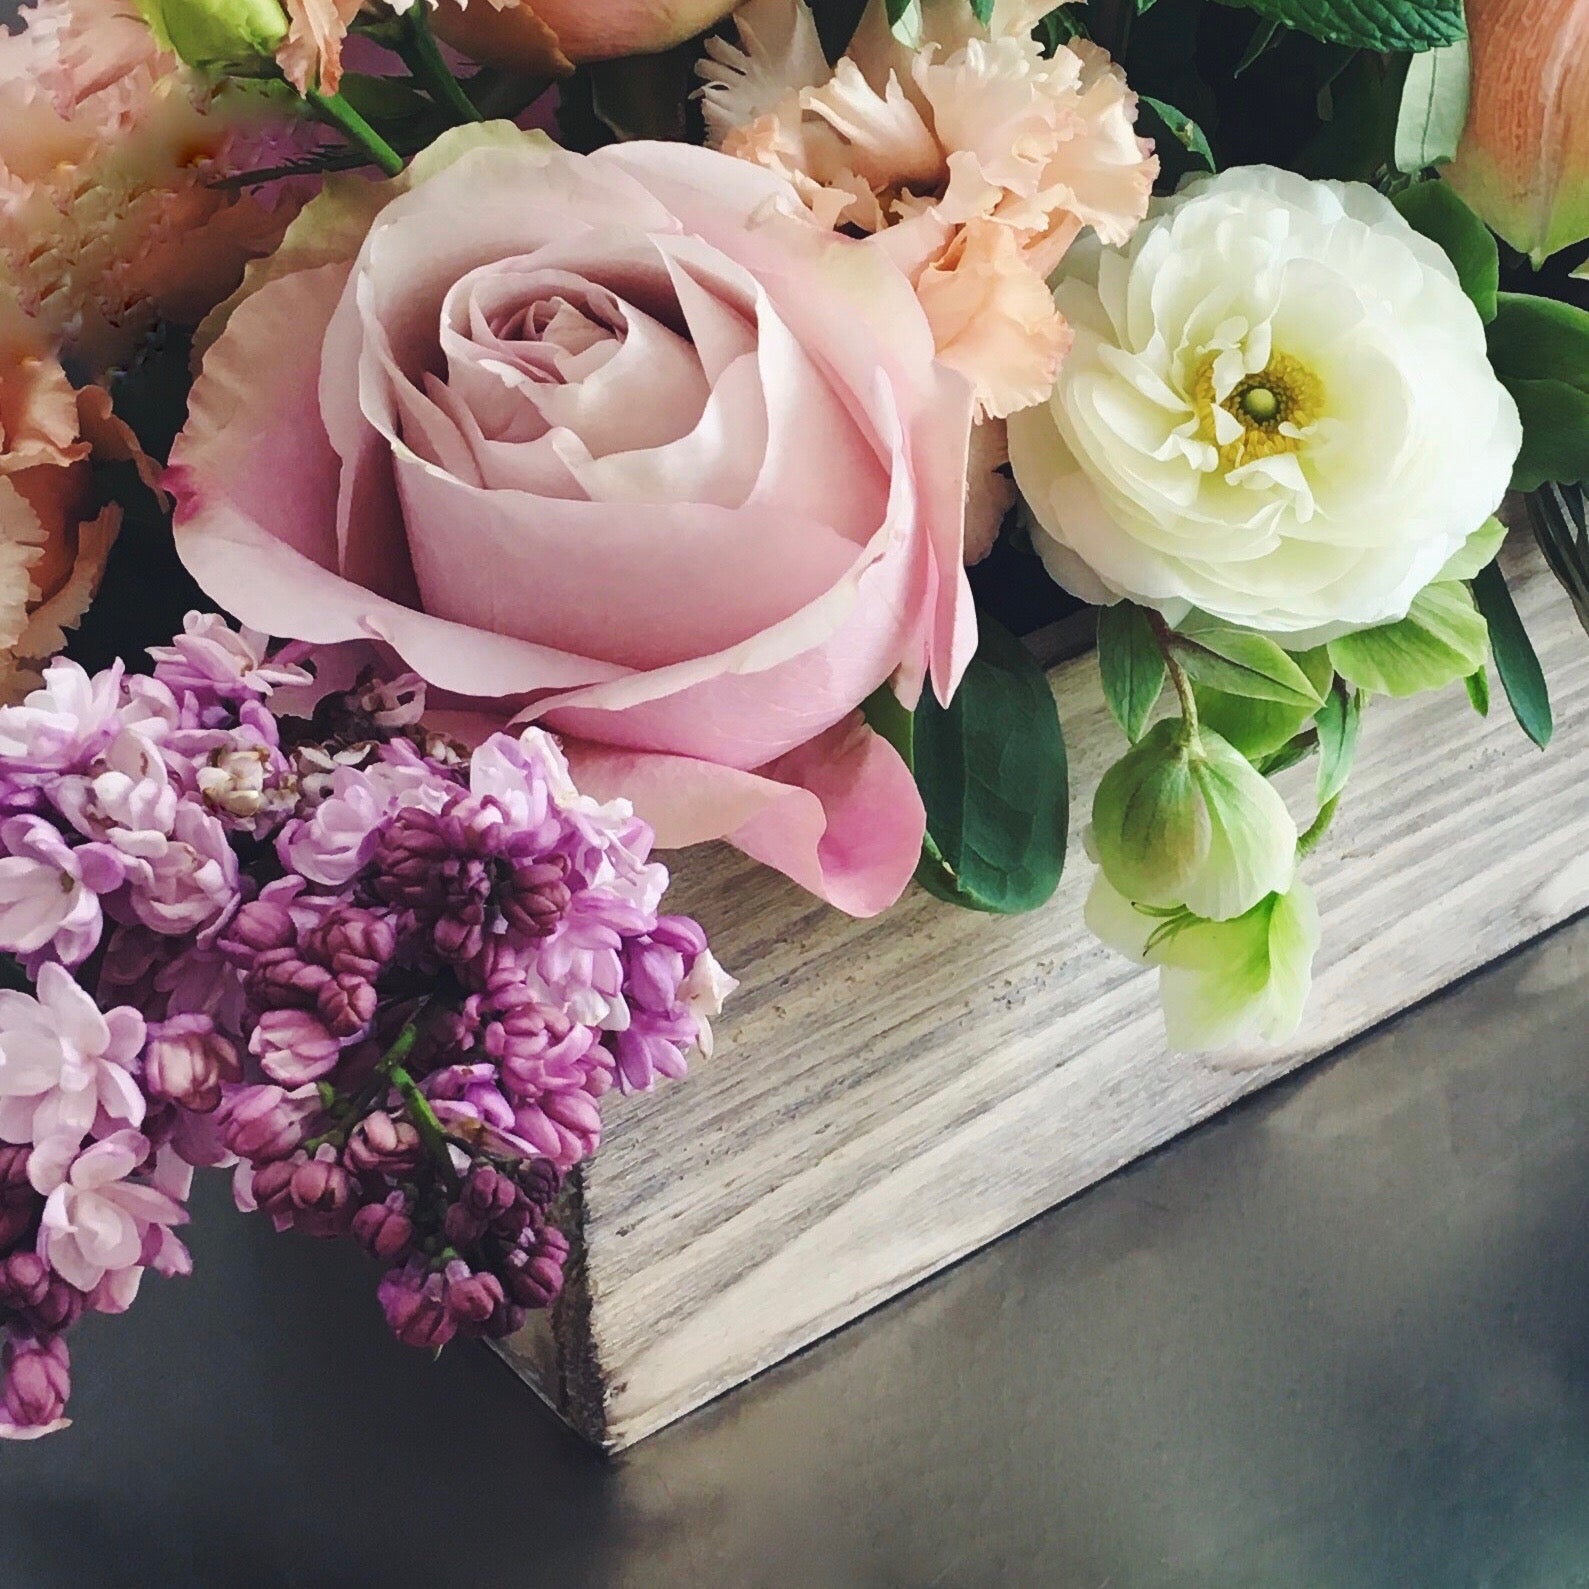 Flower Stories: Kristen - "Lilac Laundry & Flowers Across Generations" by Phoenix R